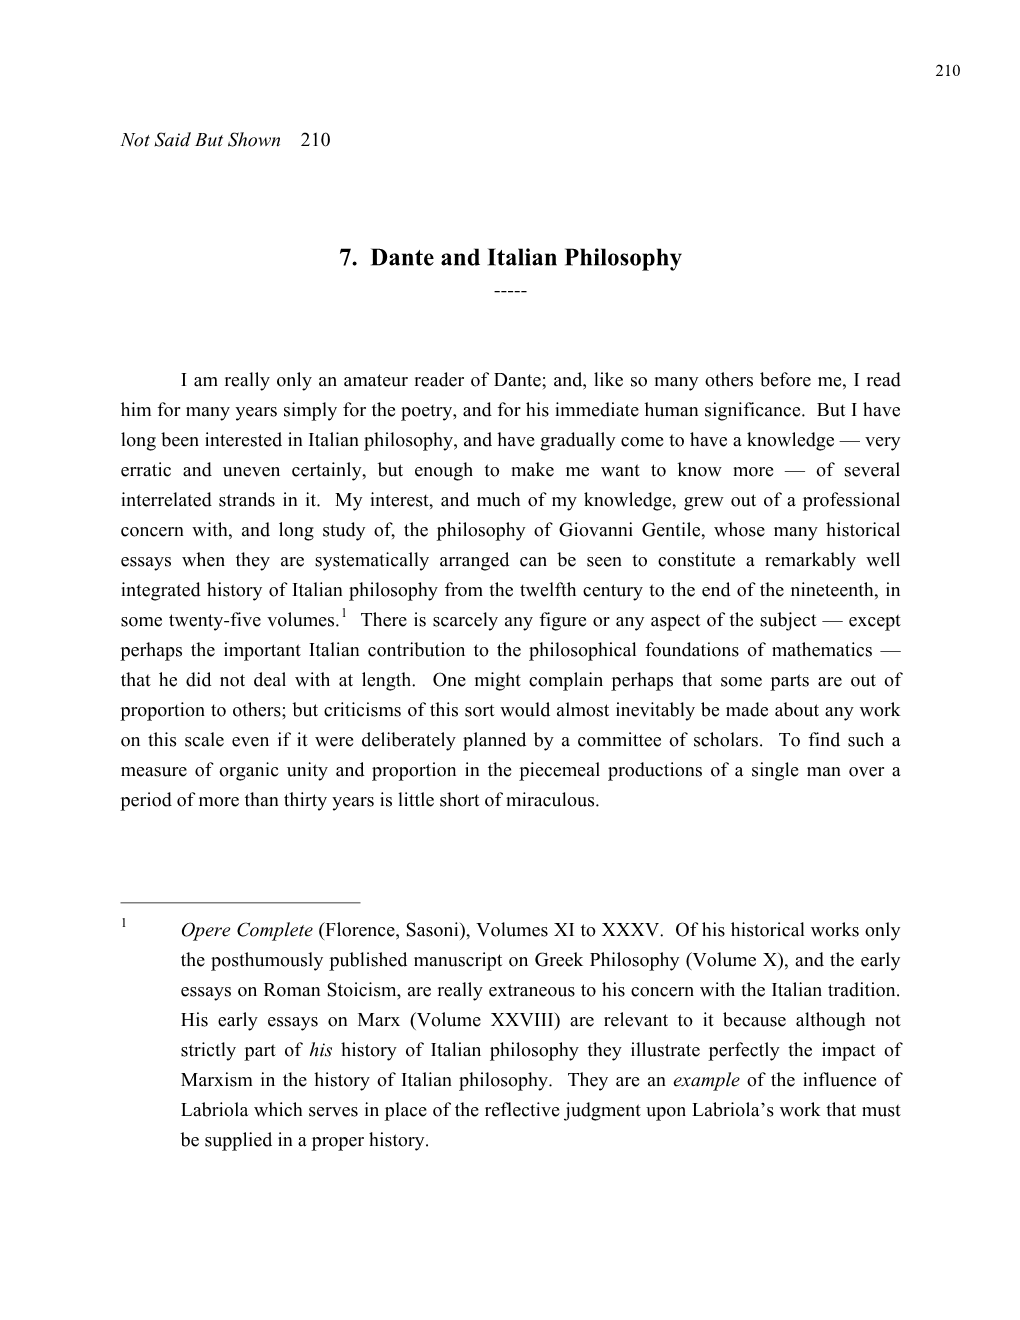 7. Dante and Italian Philosophy